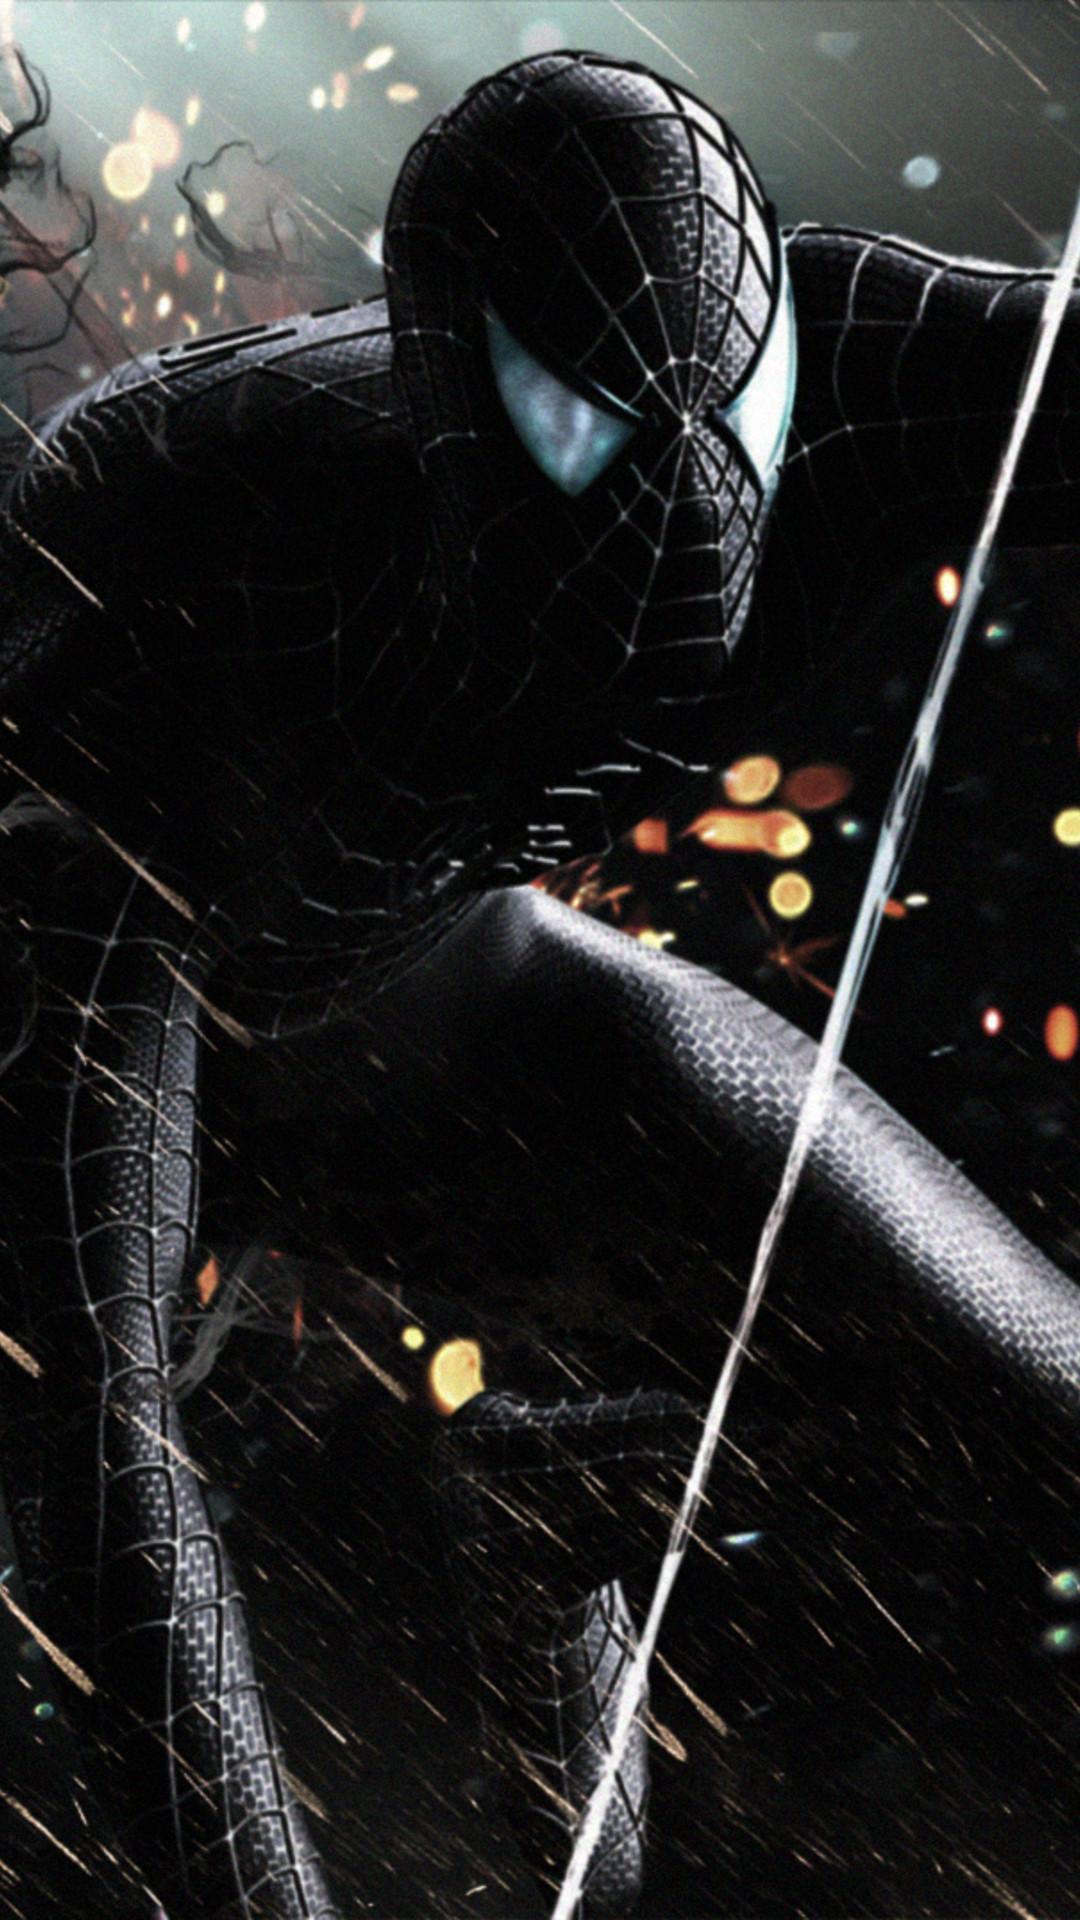 Symbiote Spiderman Wallpaper background picture